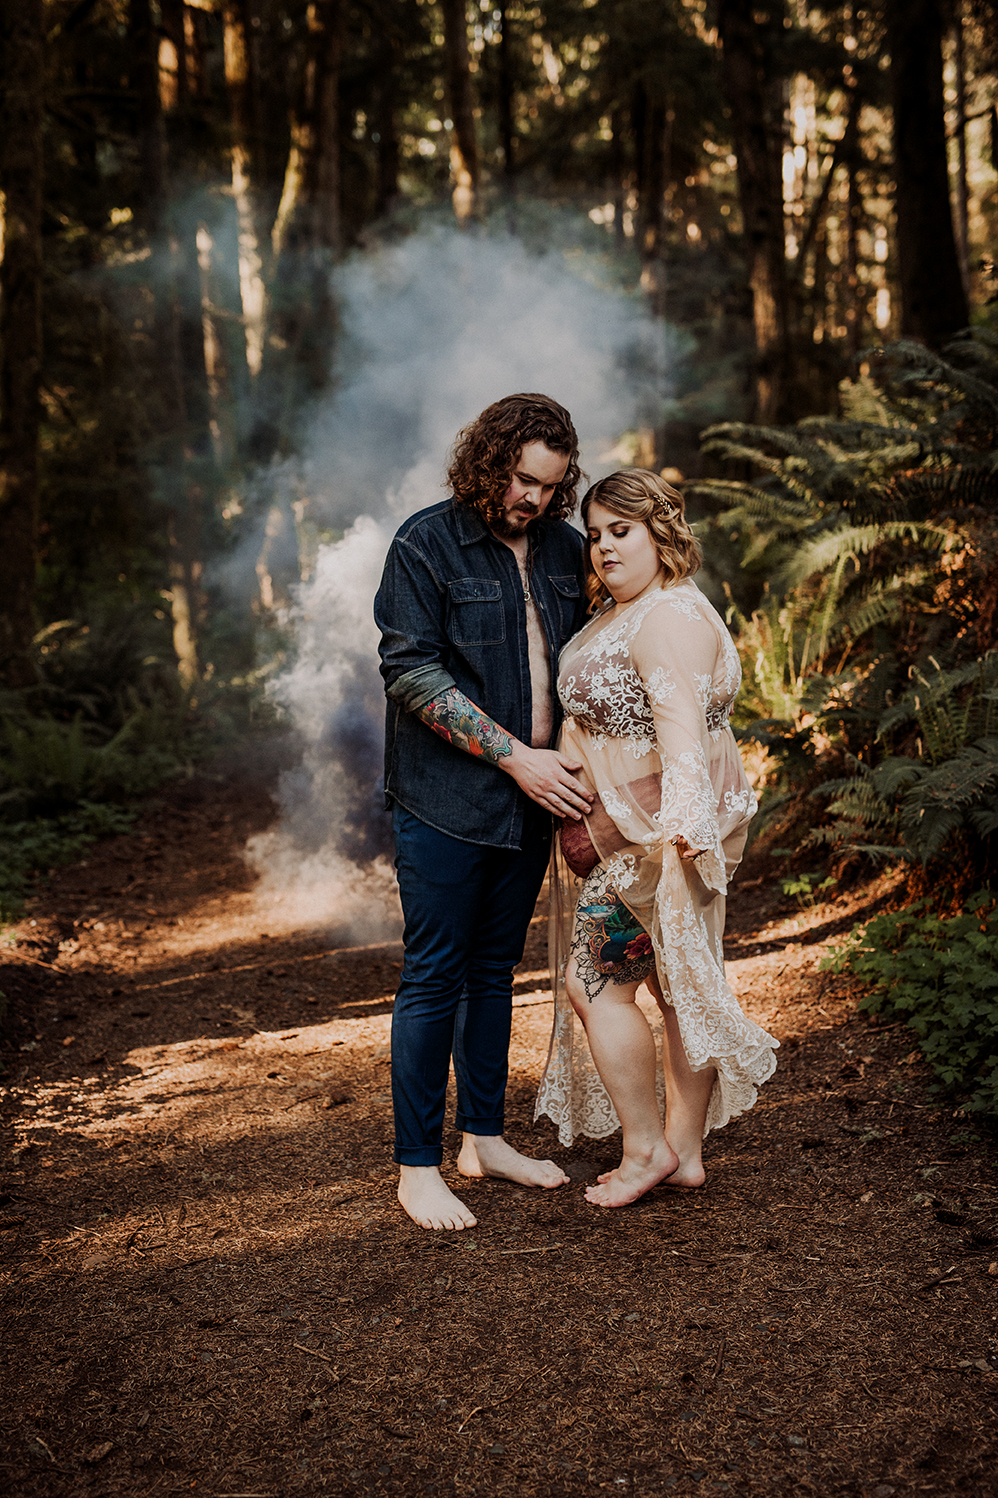 Vancouver-Island-Couples-Boudoir-Moss-Photography-17.jpg